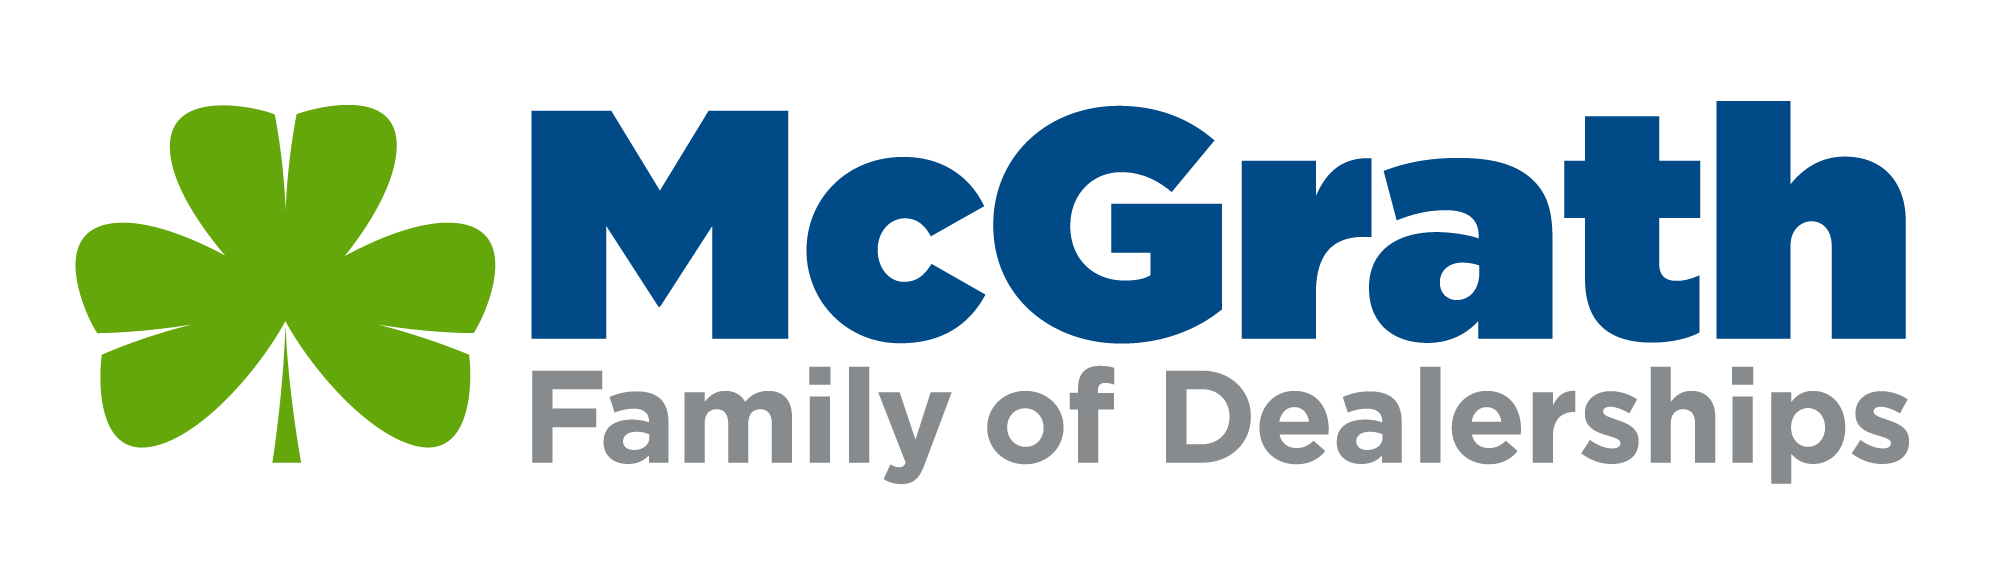 McGrath family of dealerships